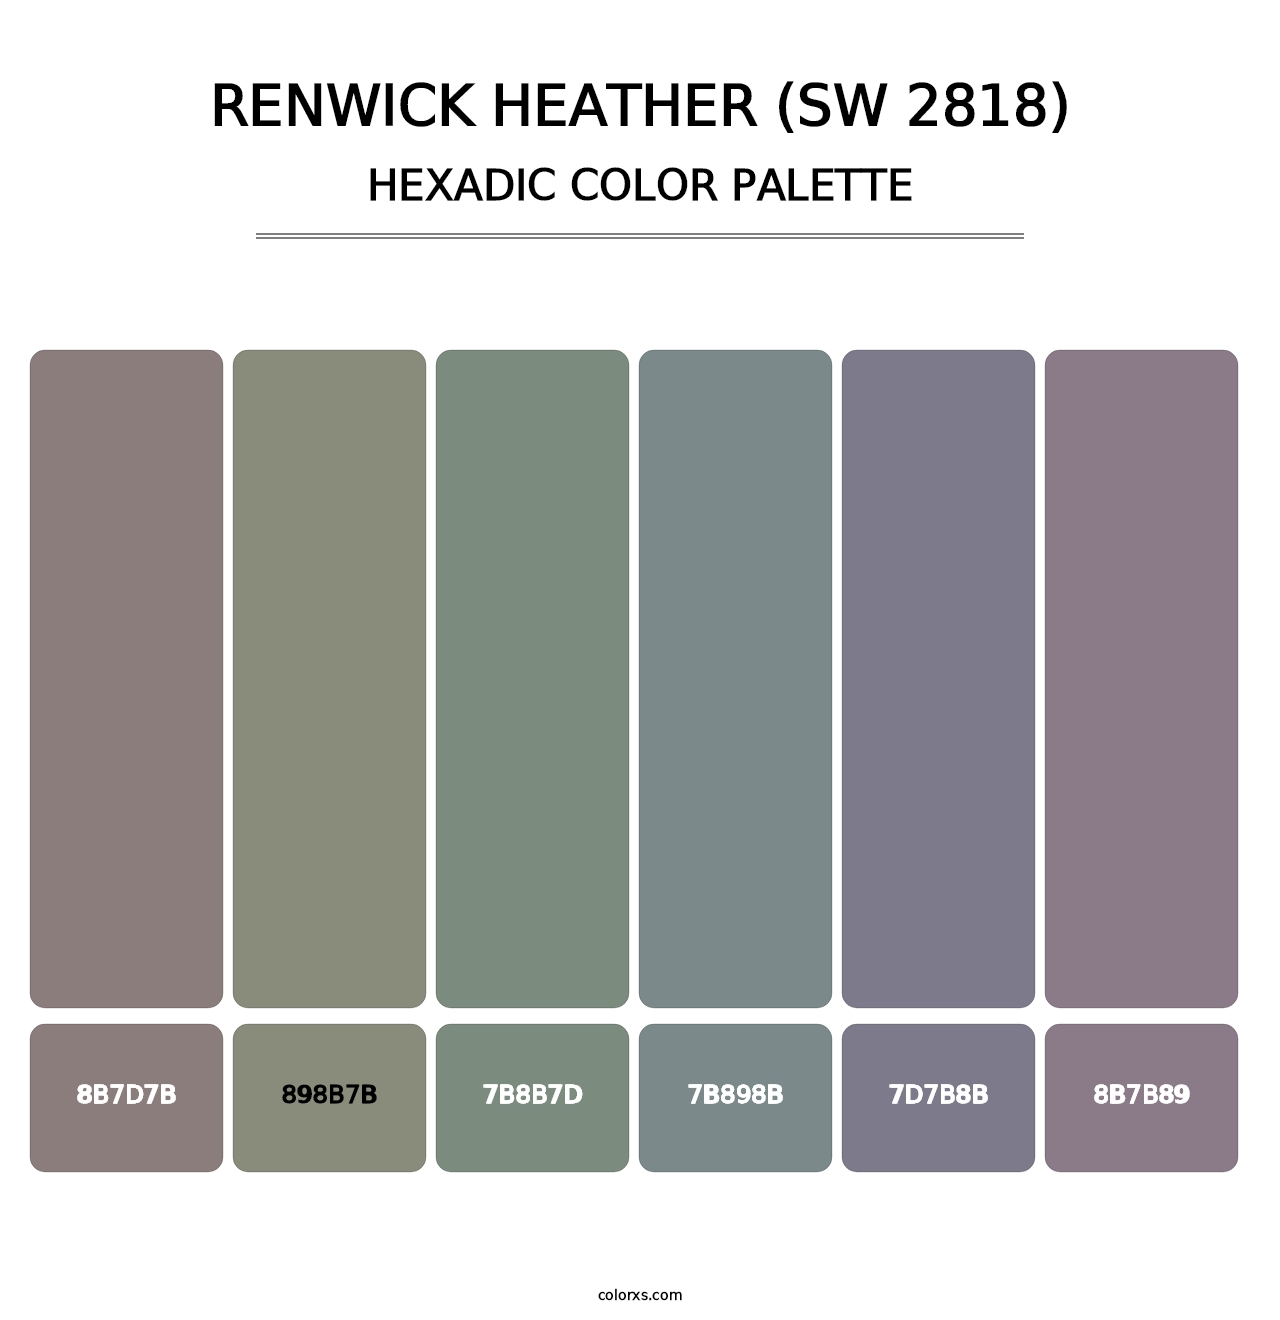 Renwick Heather (SW 2818) - Hexadic Color Palette